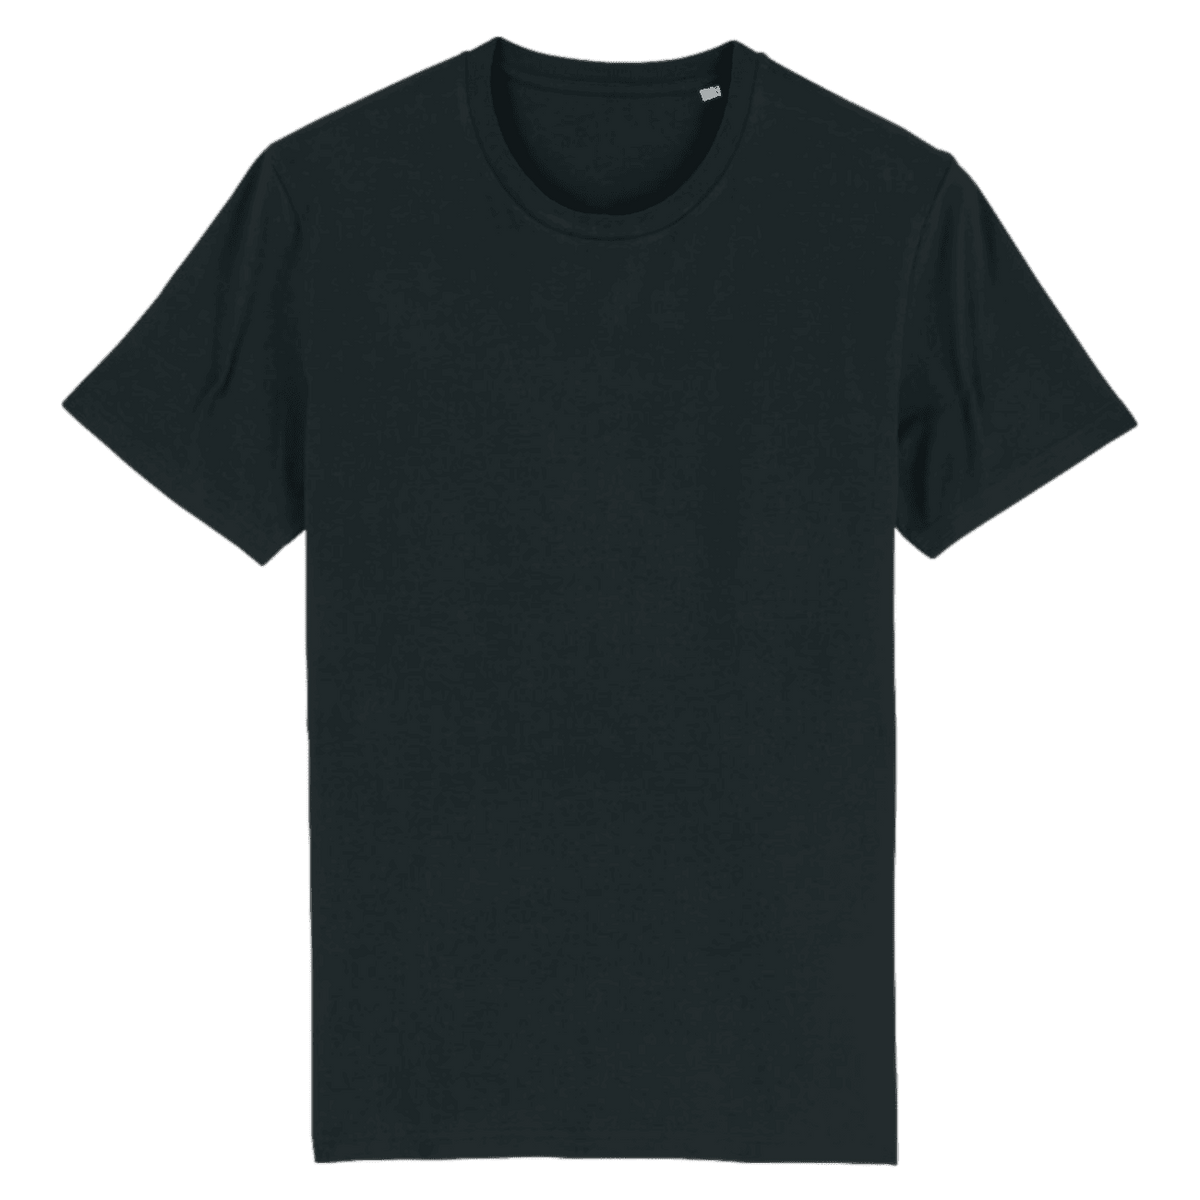 Vintage Peak - Bio Herren Shirt